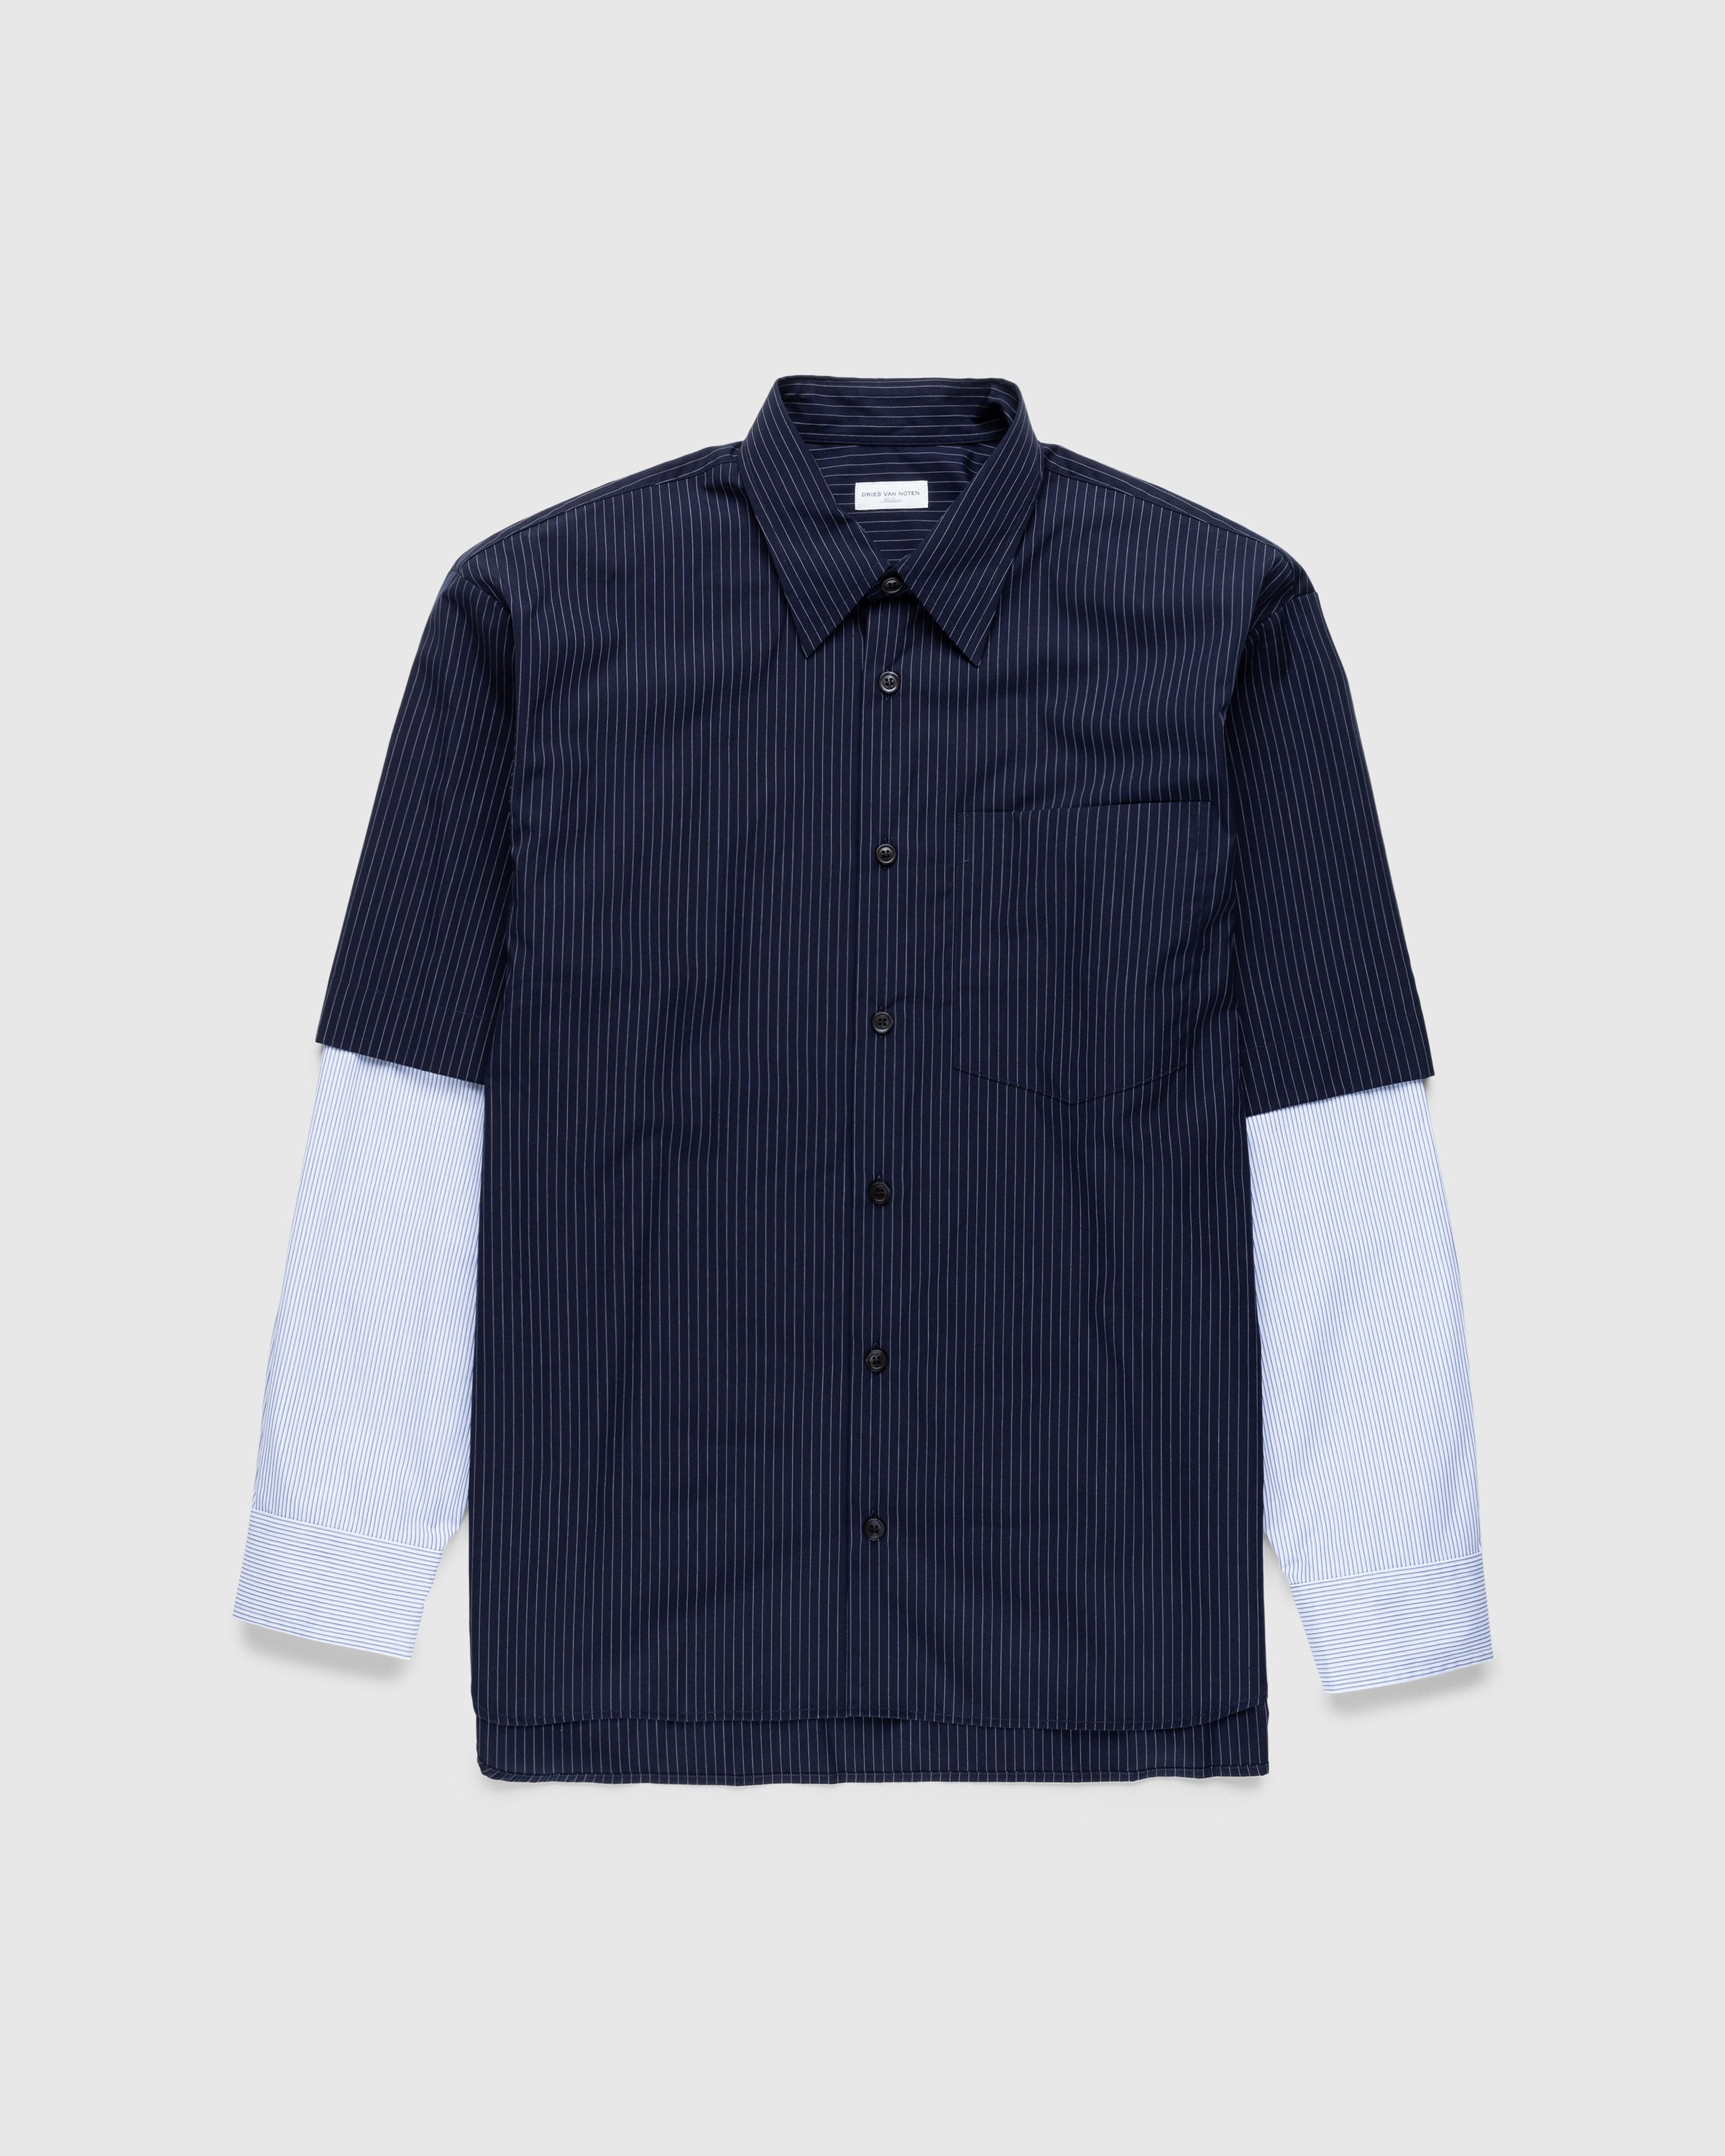 Dries van Noten - Carle Double Sleeve Shirt Navy - Clothing - Blue - Image 1